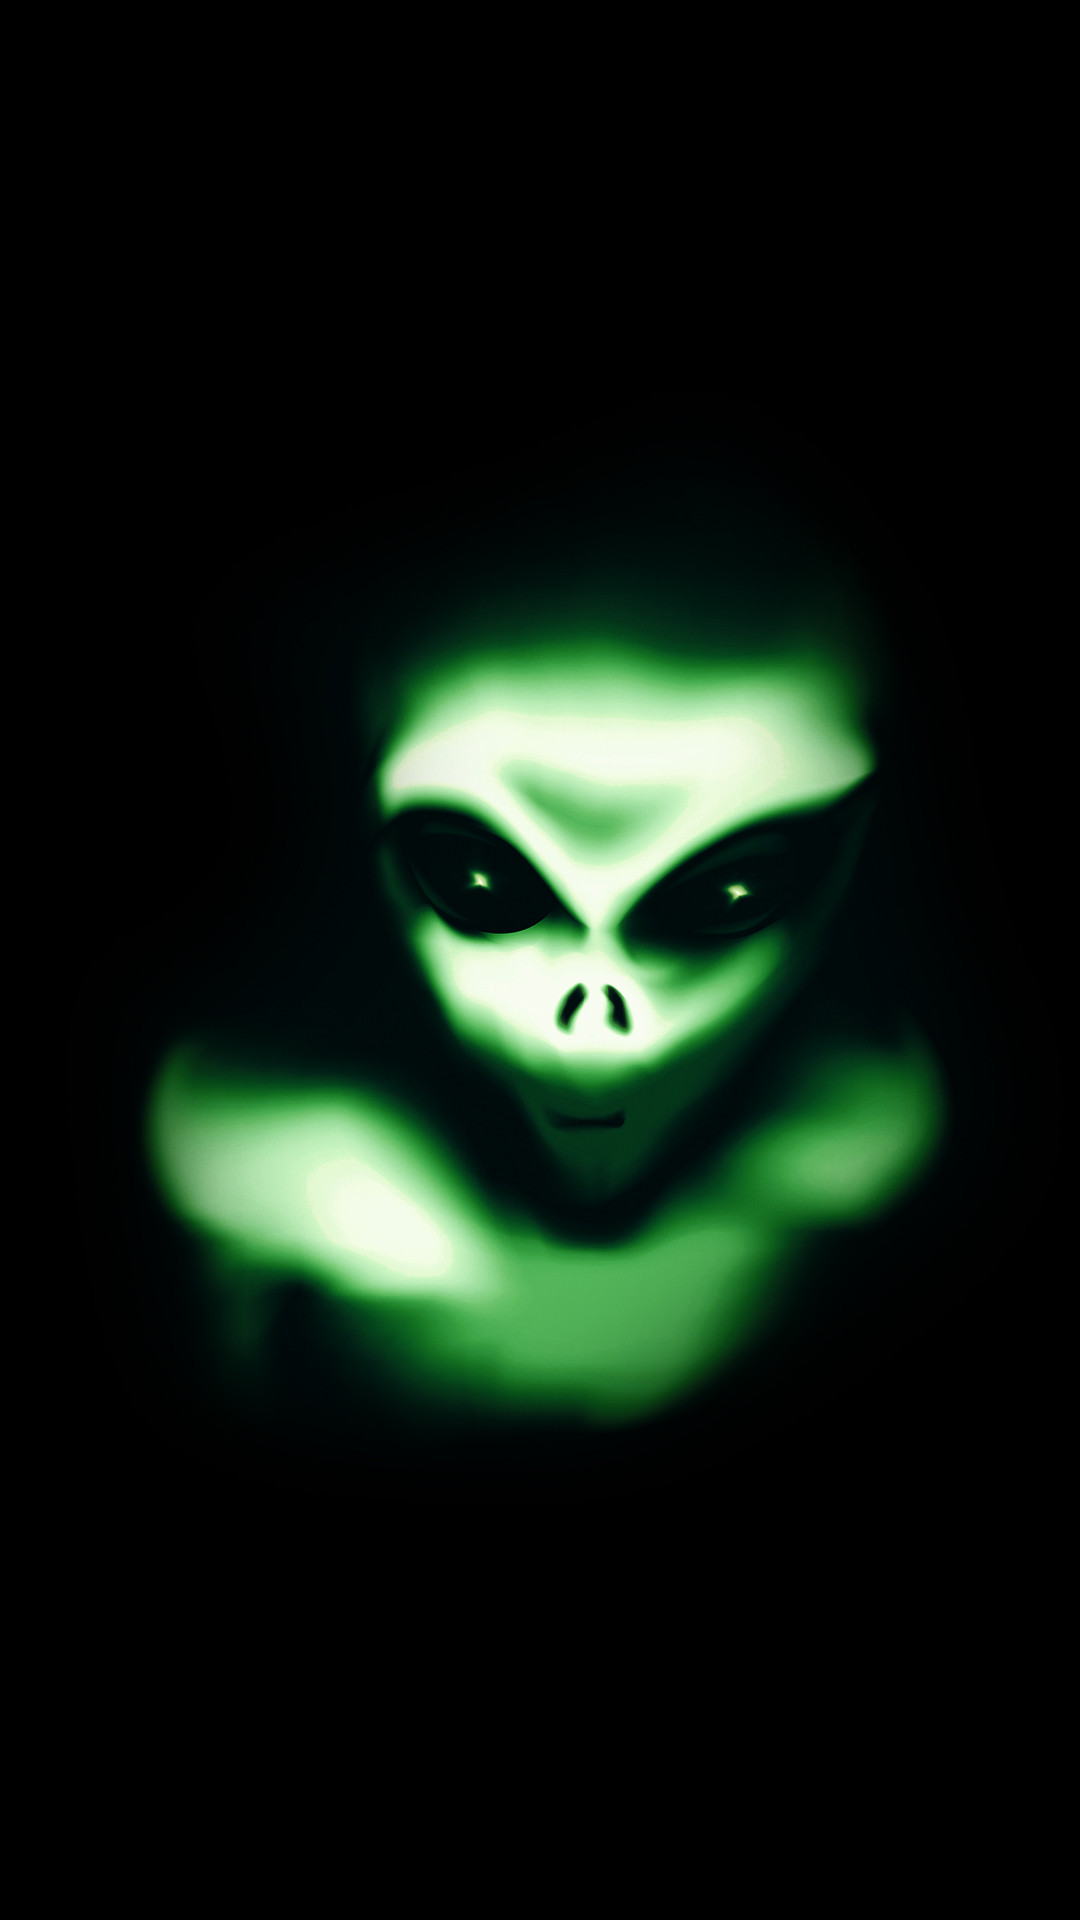 1080x1920 Green Alien Phone Wallpaper